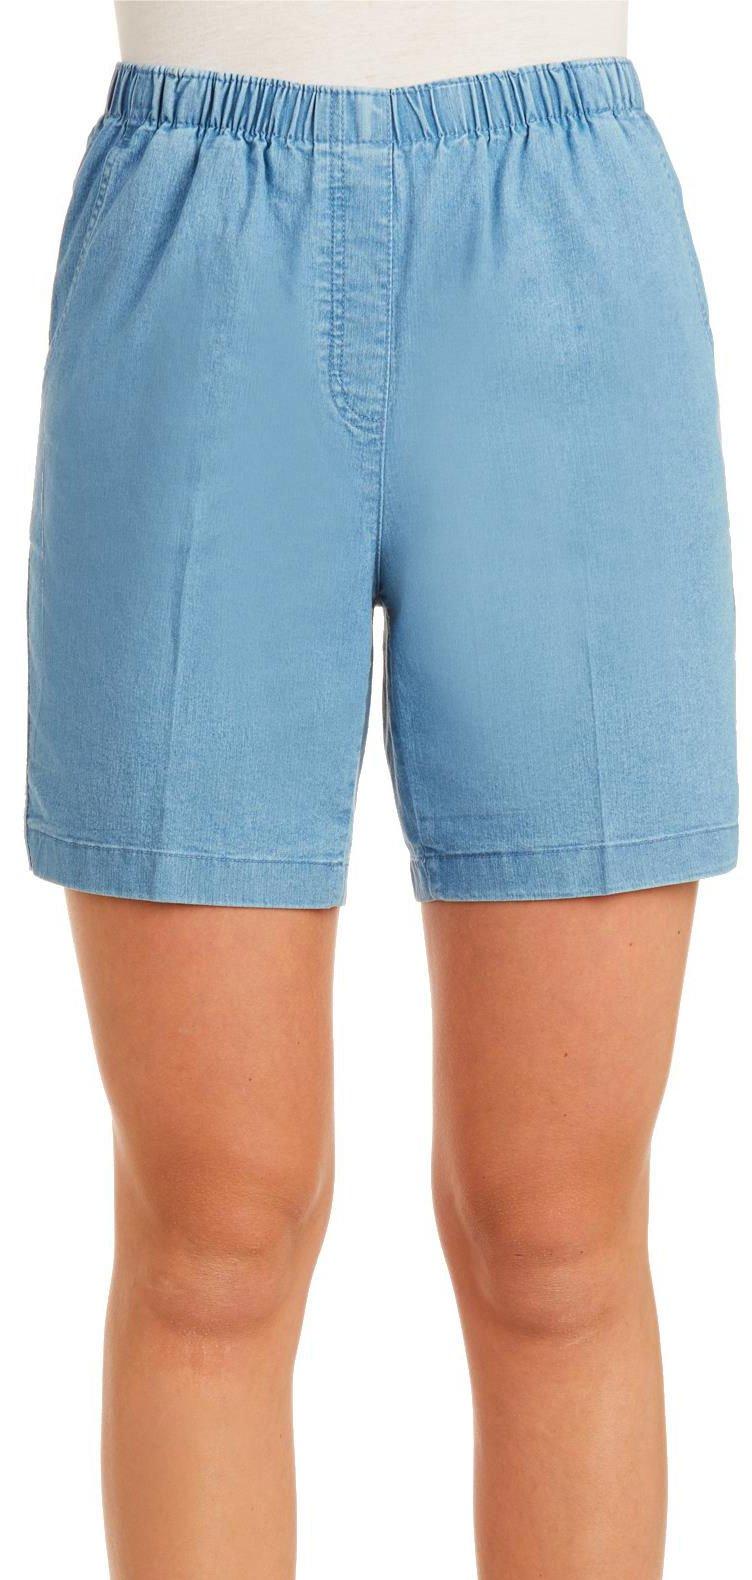 bealls plus size shorts